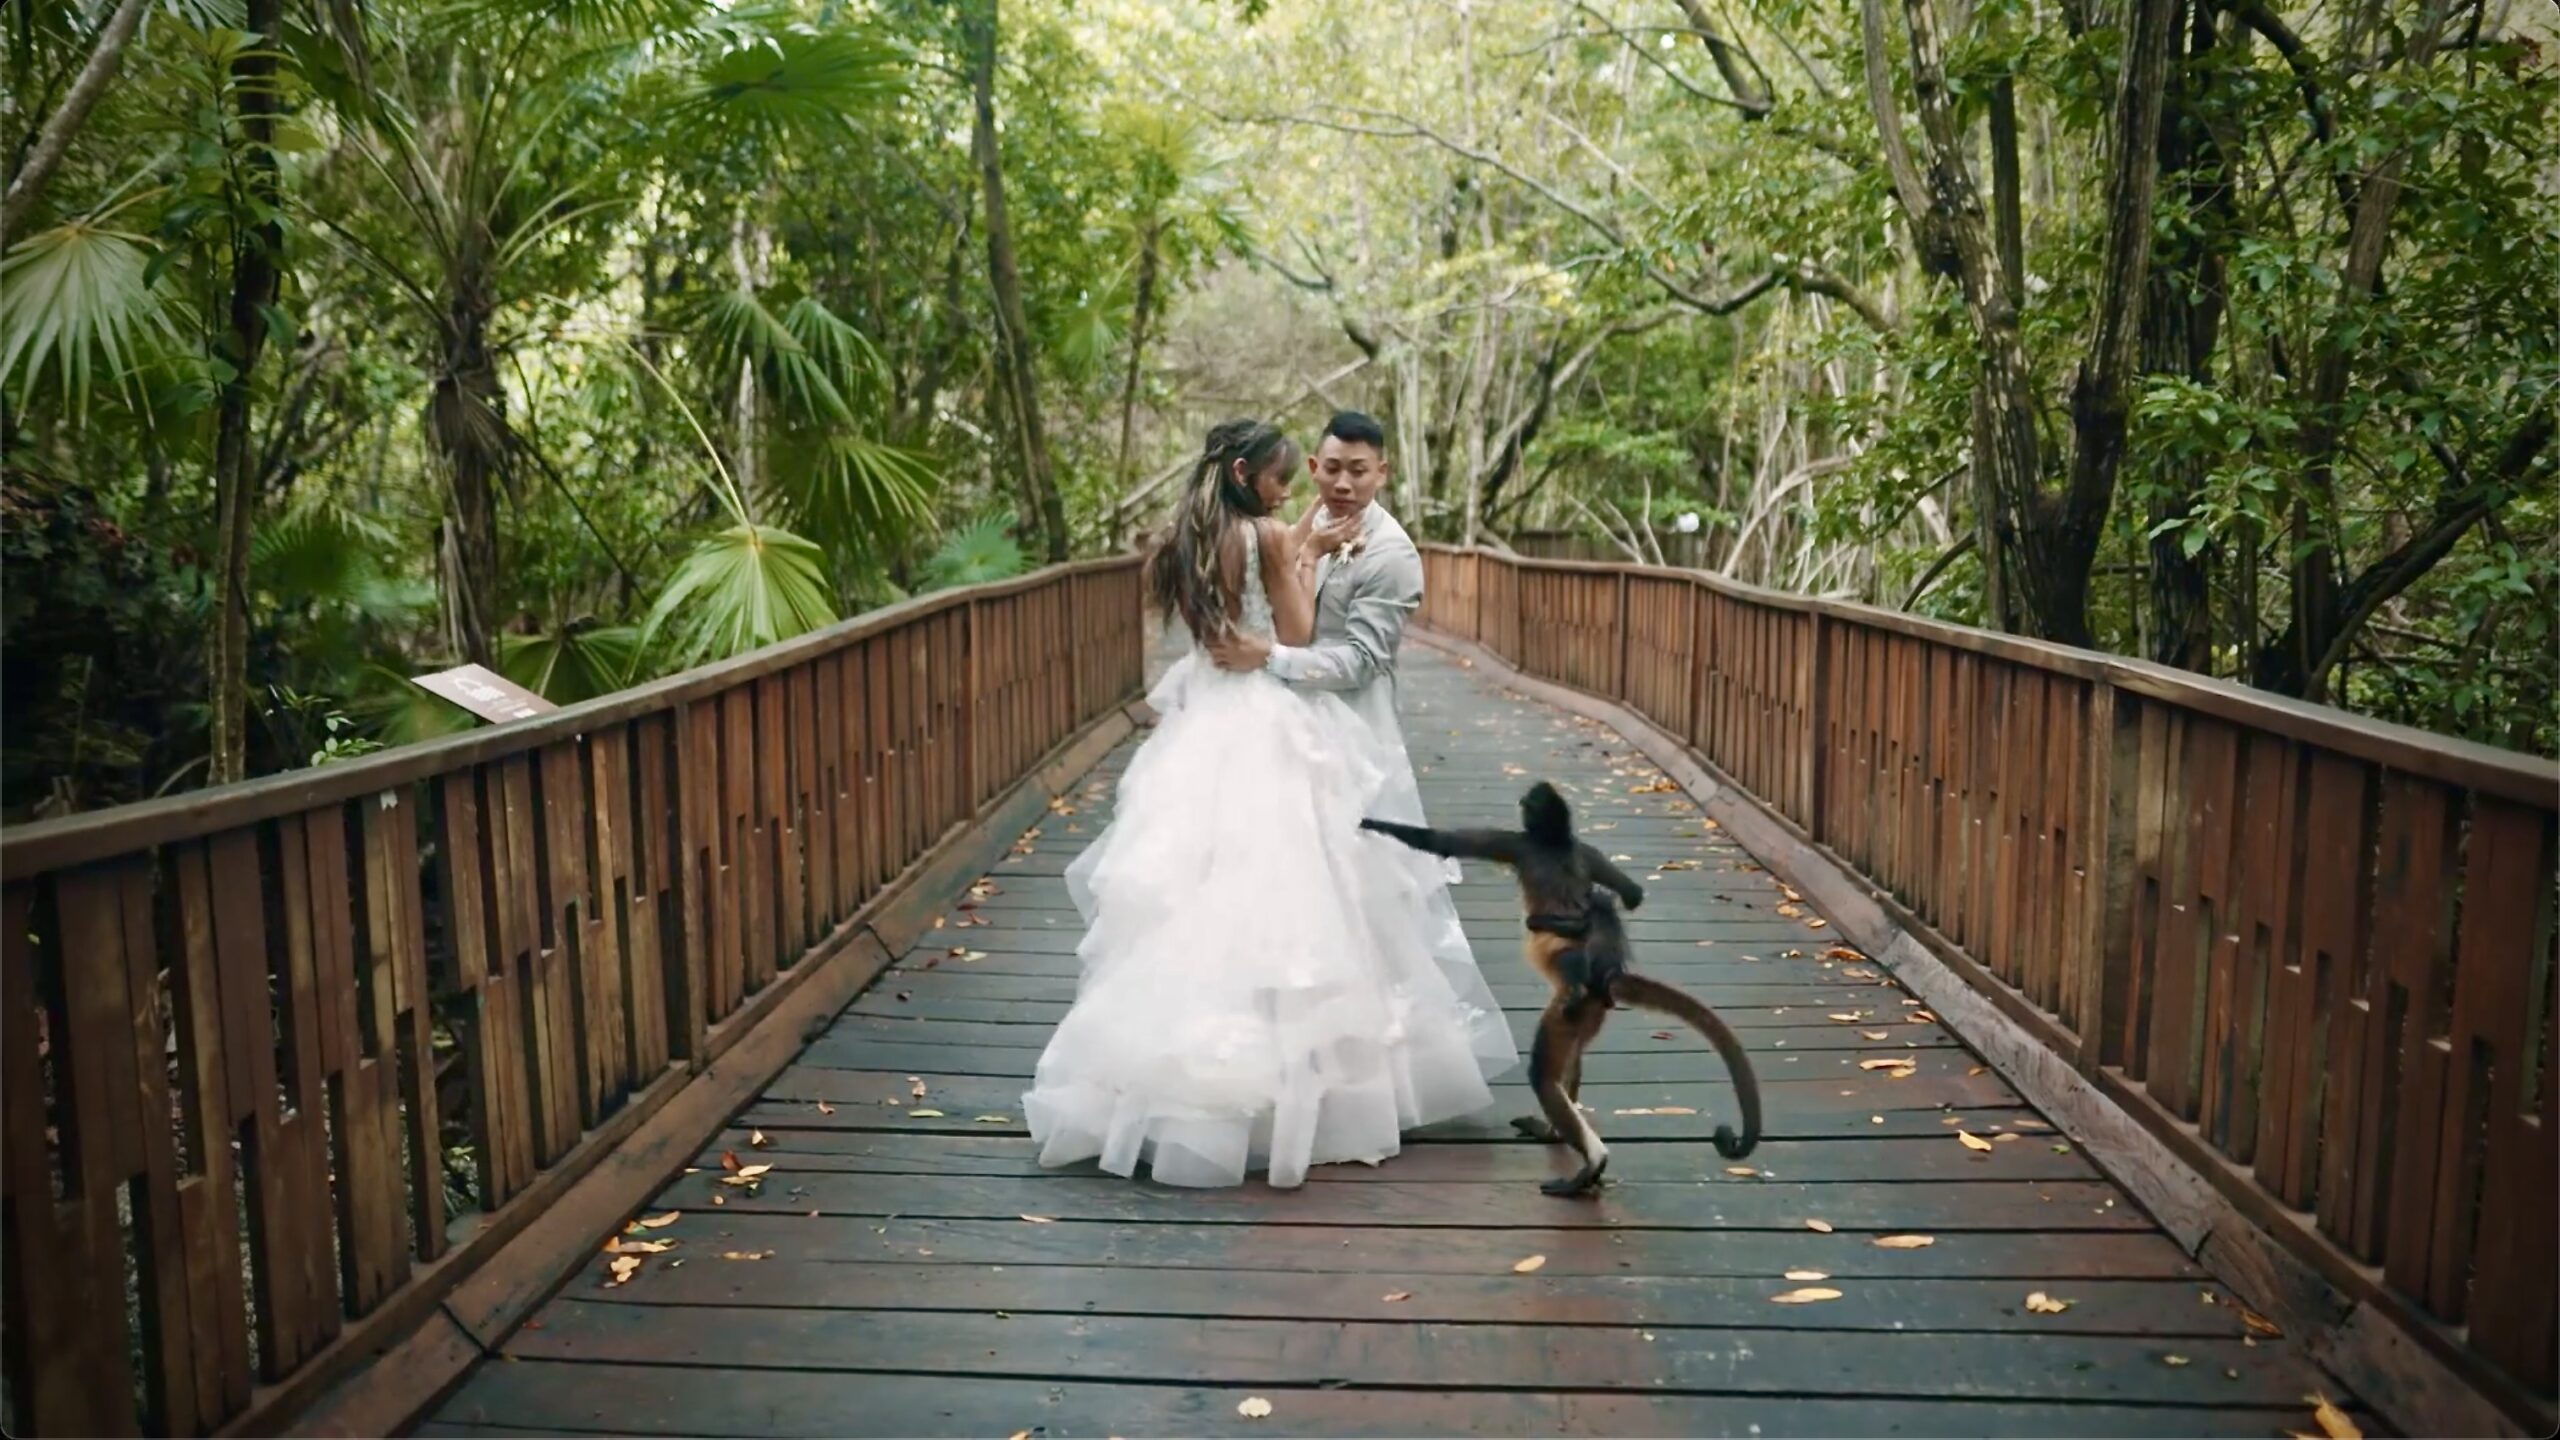 Bride & Groom dancing and monkey gatecrashes wedding | Destination wedding Cancun Mexico